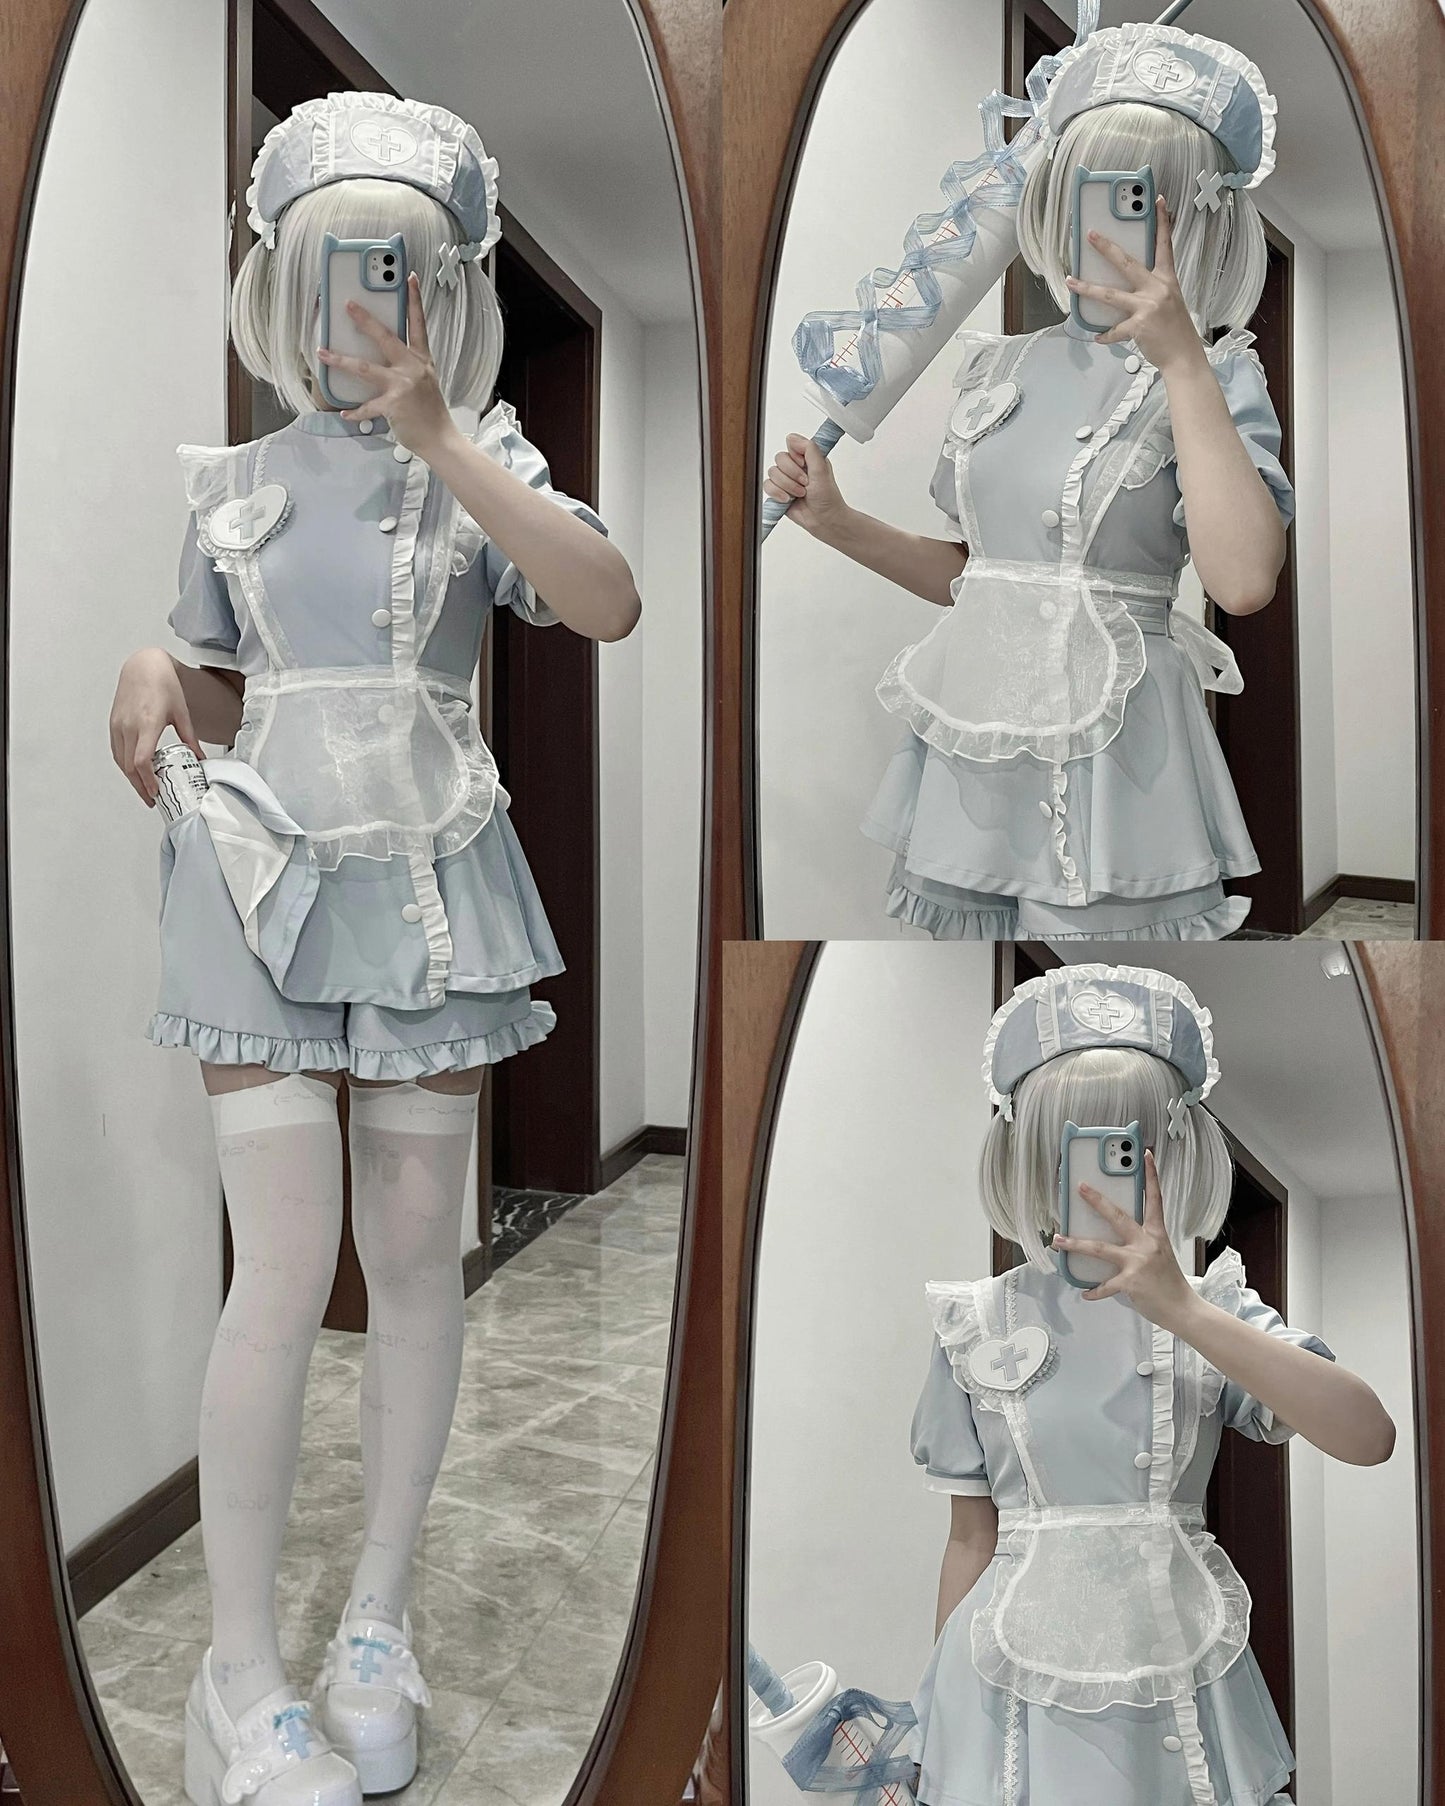 Tenshi Kaiwai Dress Set Nurse Medical Series Outfit Sets 37460:560248